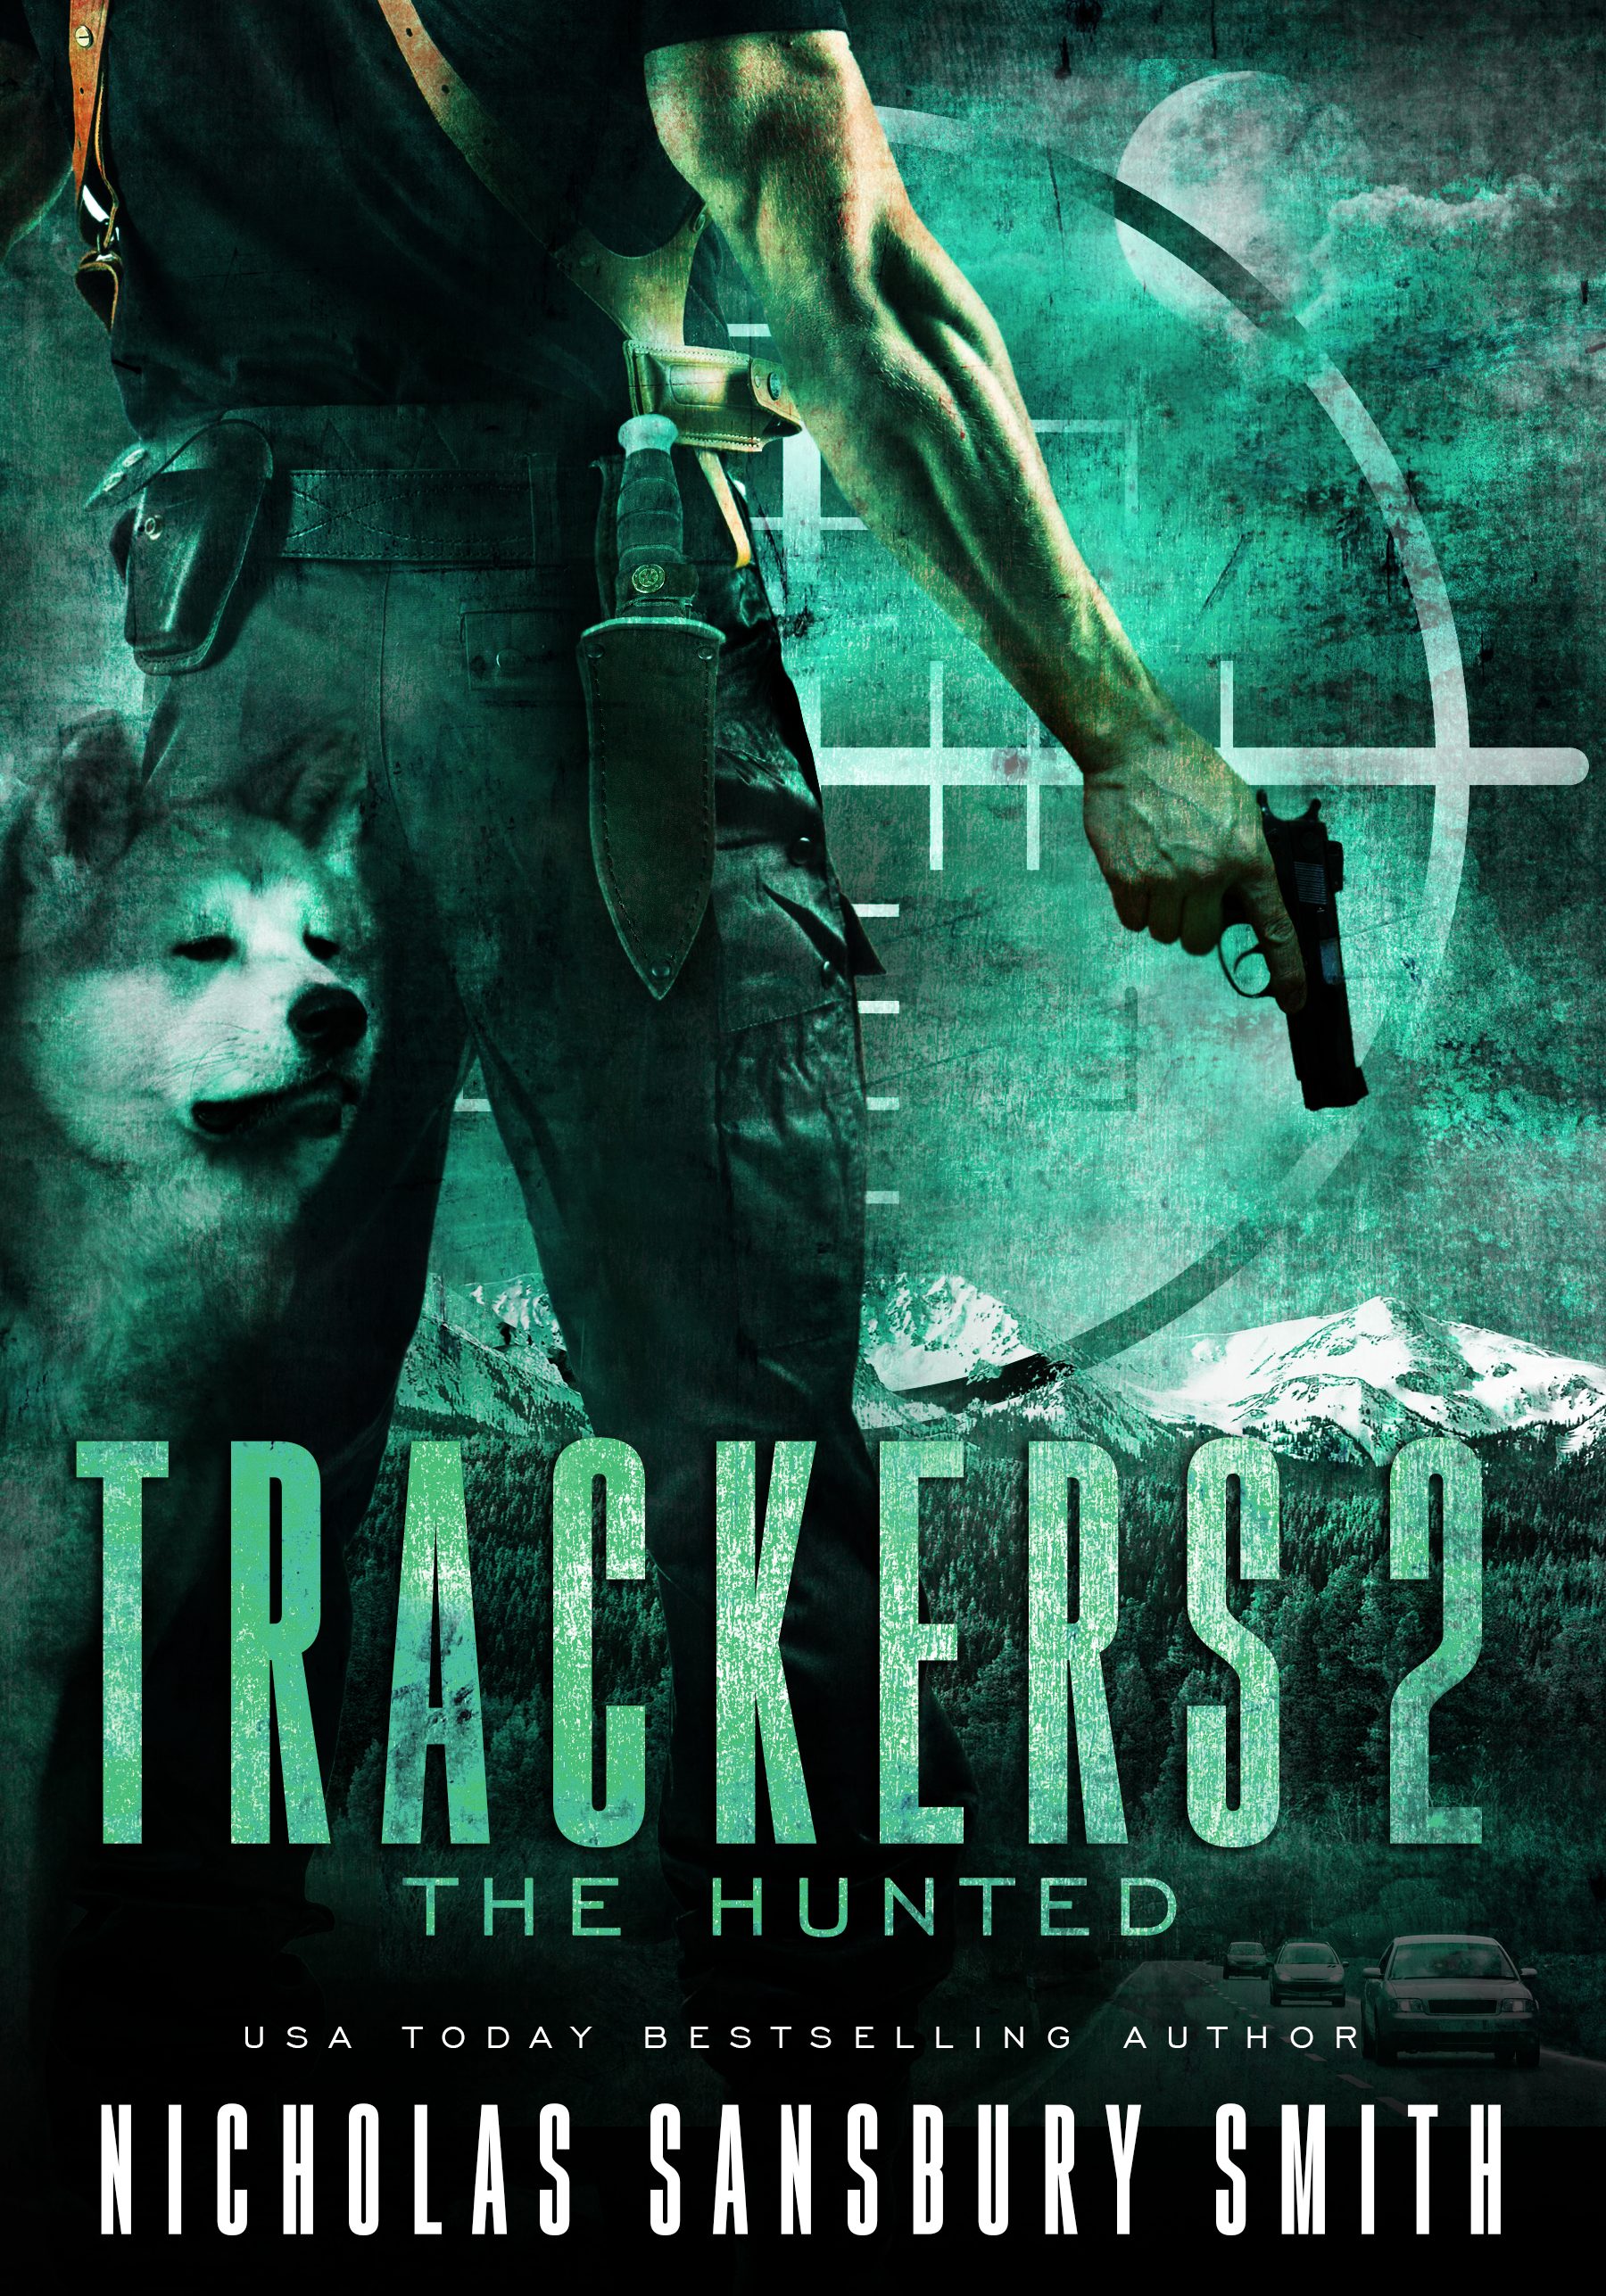 trackers 2 book trailer loewenherz creative